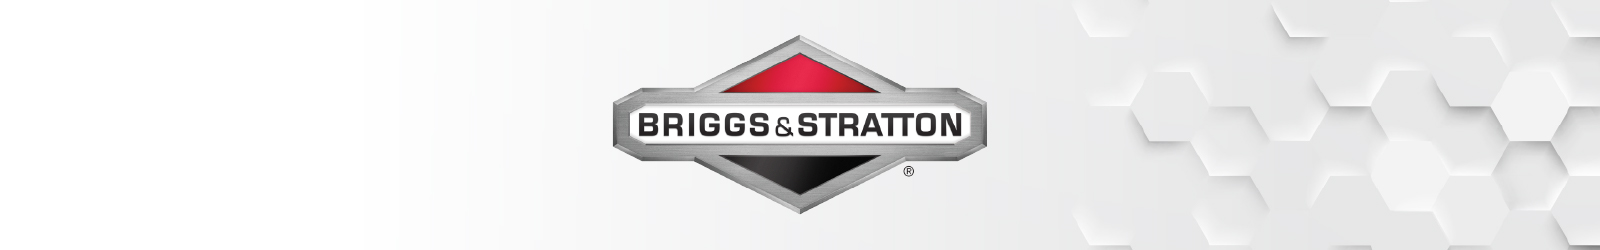 Briggs & Stratton Advertising Media Assets